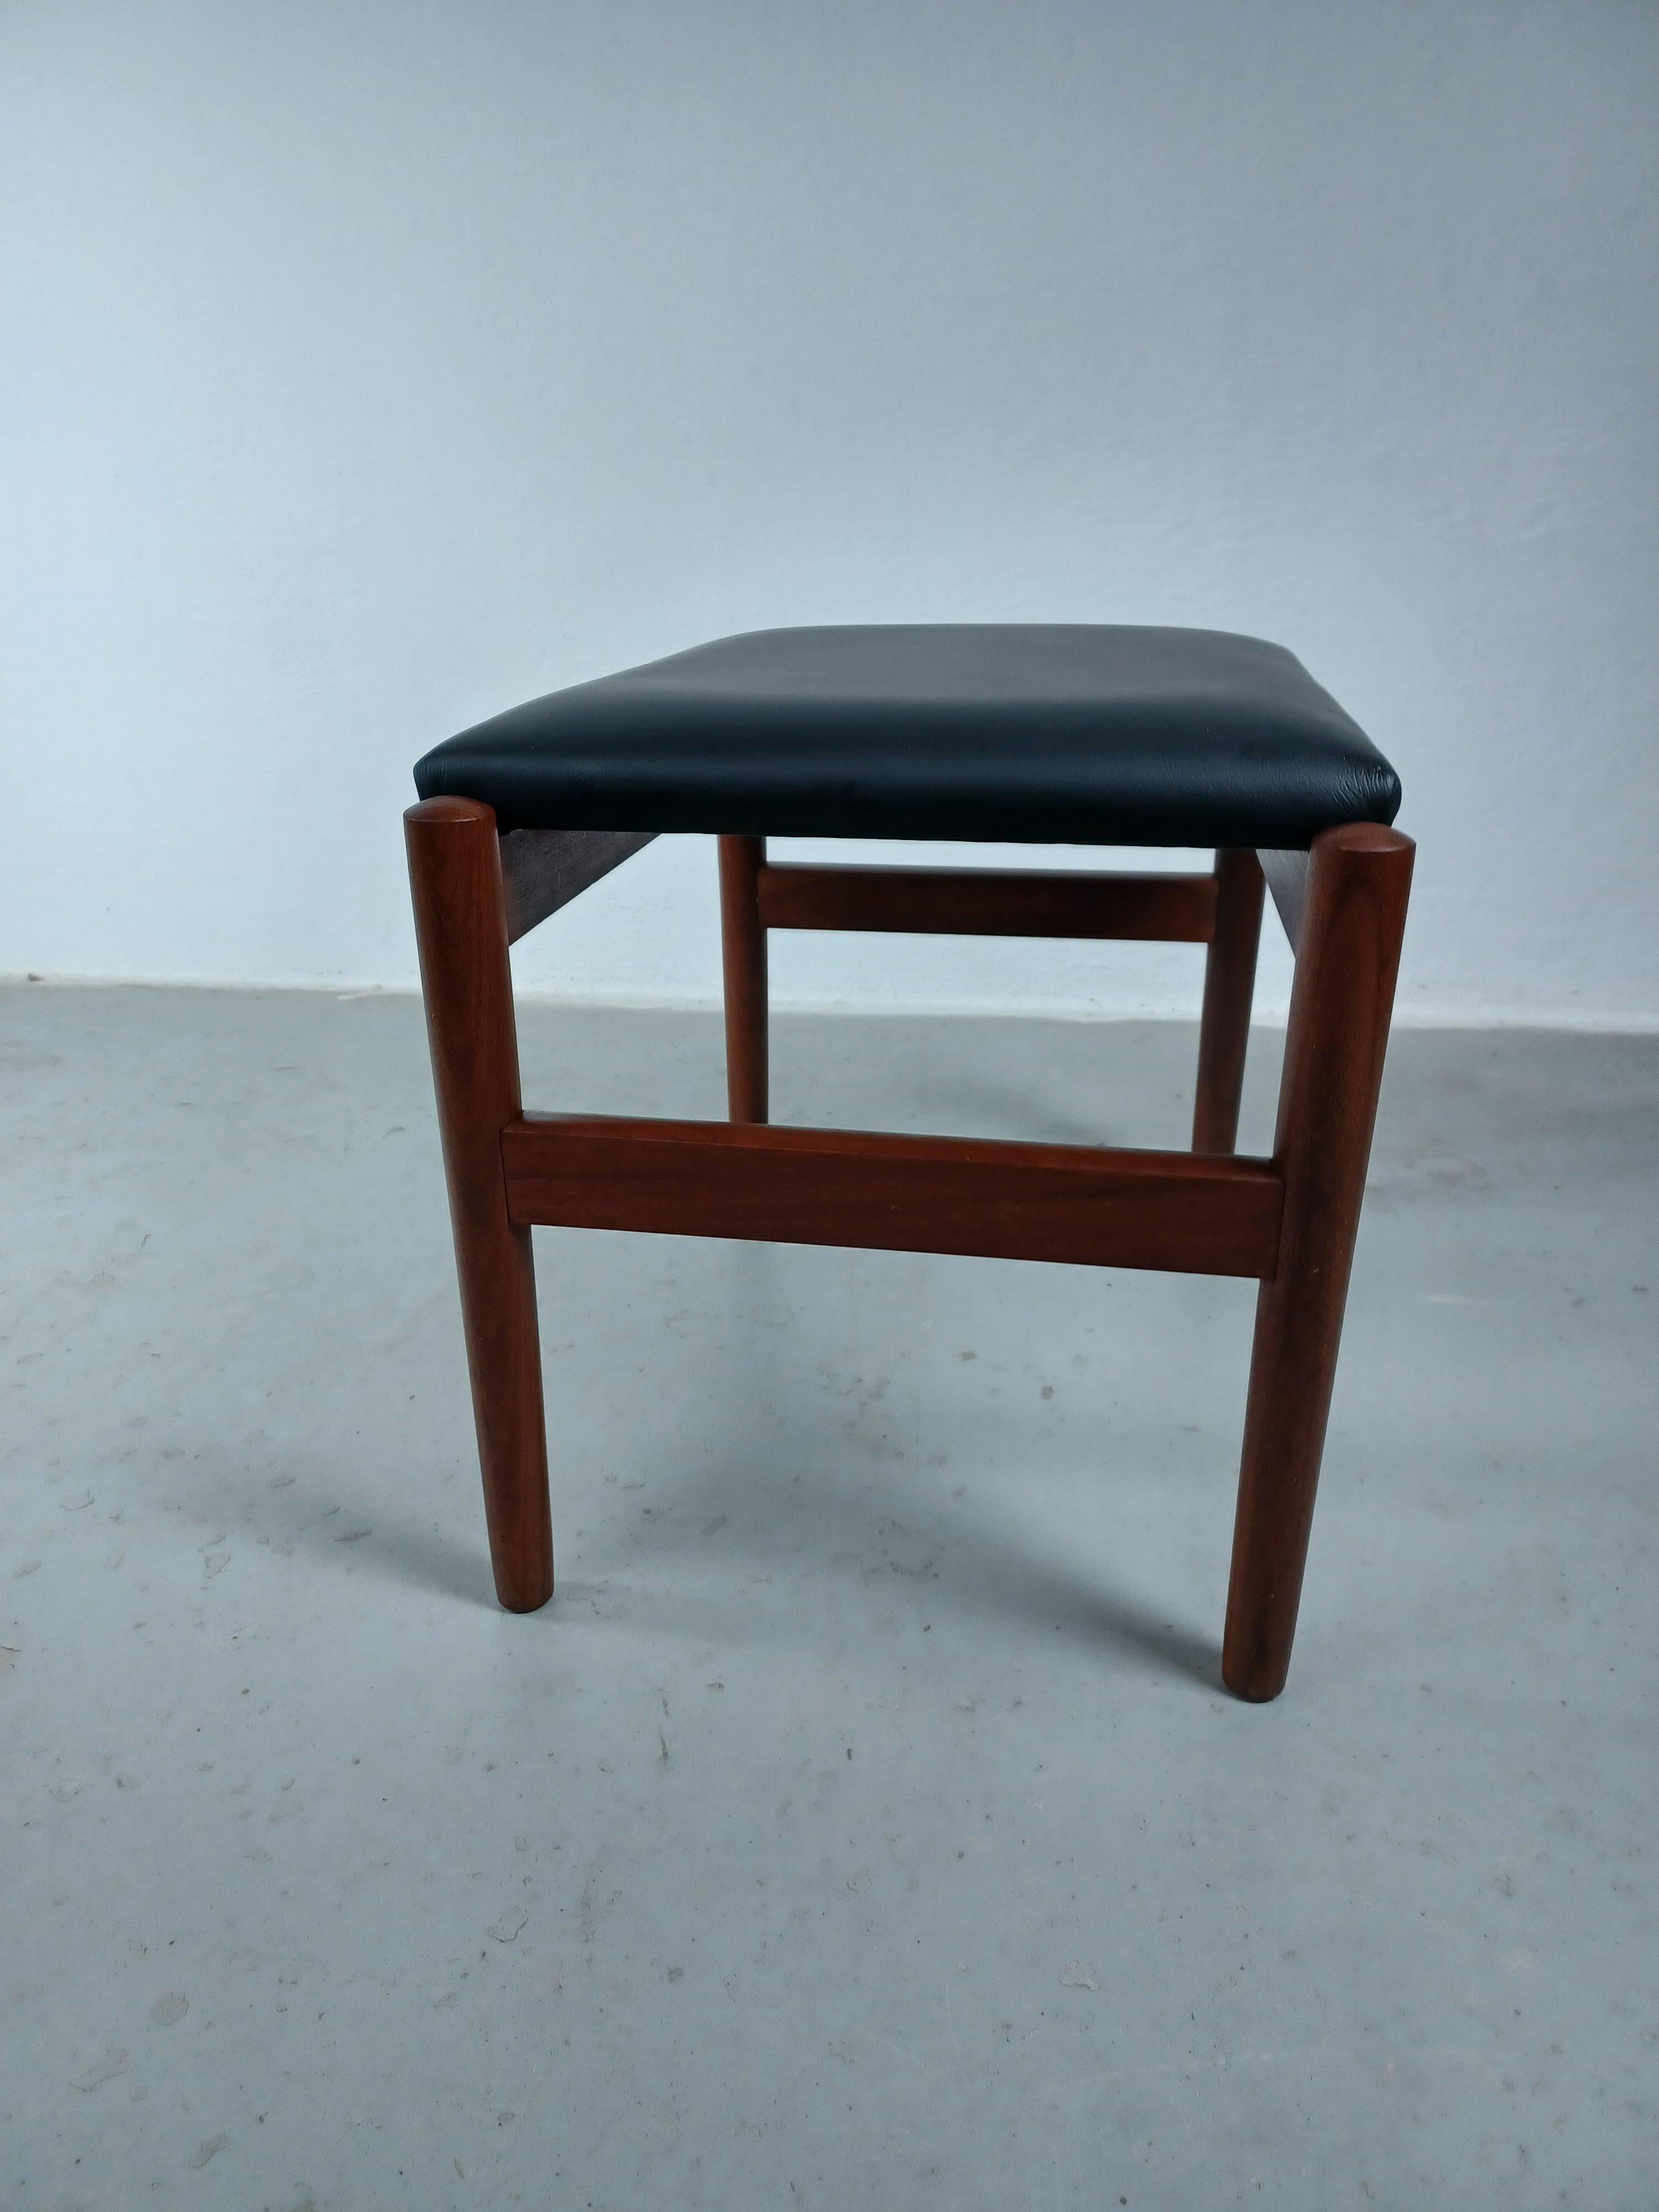 Scandinavian Modern 1960s, Restored Danish Teak Footstool Reupholstered in Black Leather For Sale